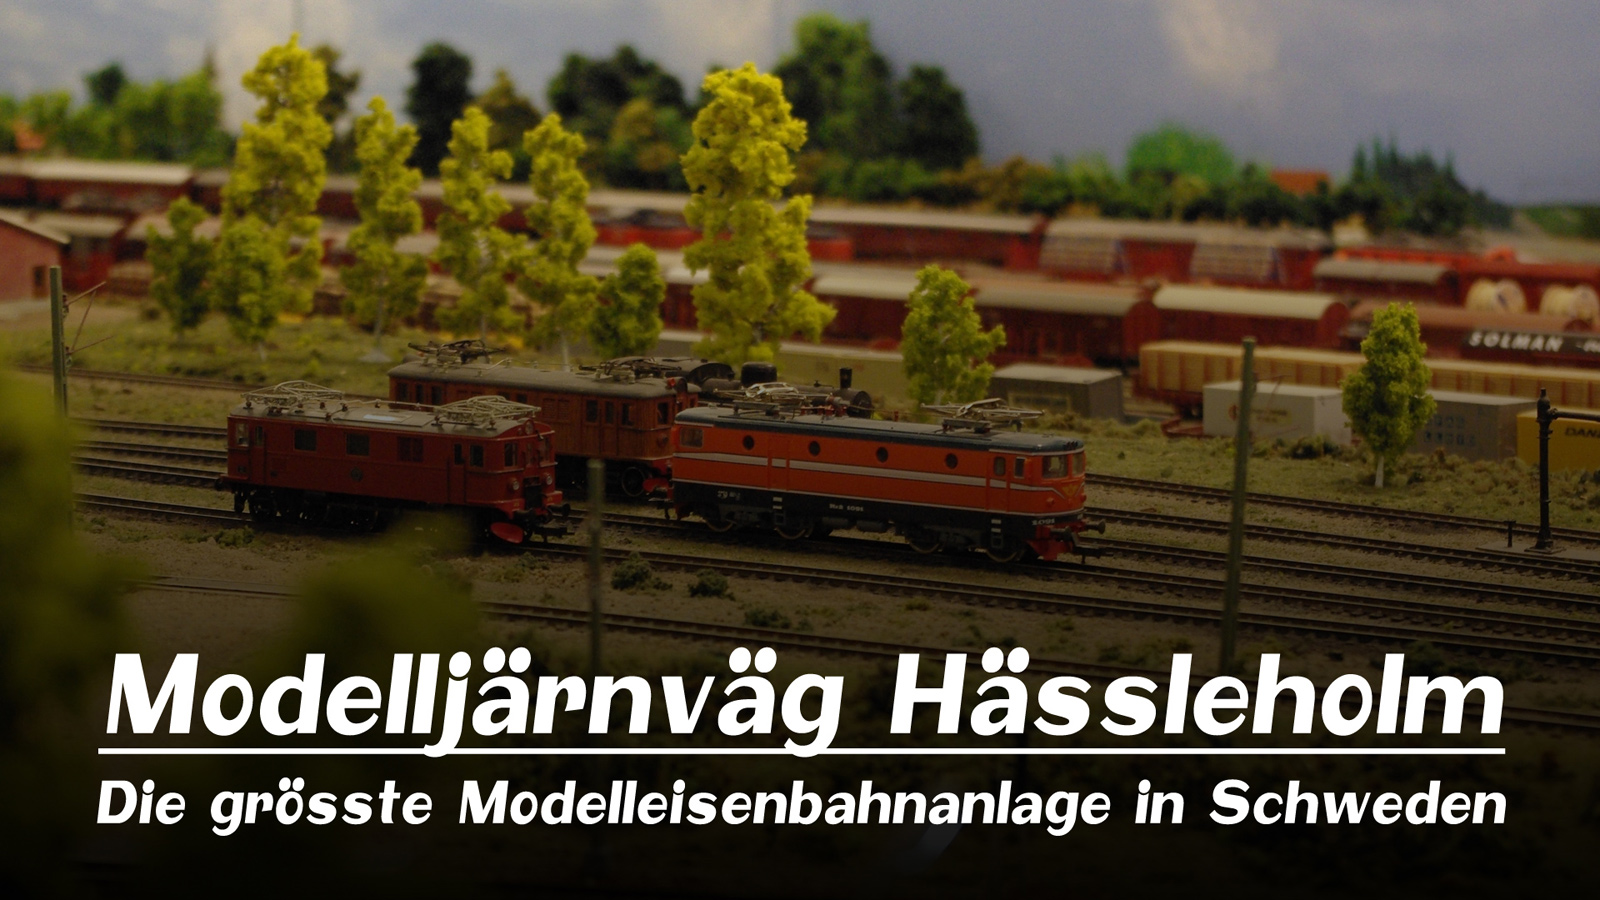 Pennula bei Prime Video: Modelljärnväg Hässleholm - Die grösste Modelleisenbahn in Schweden